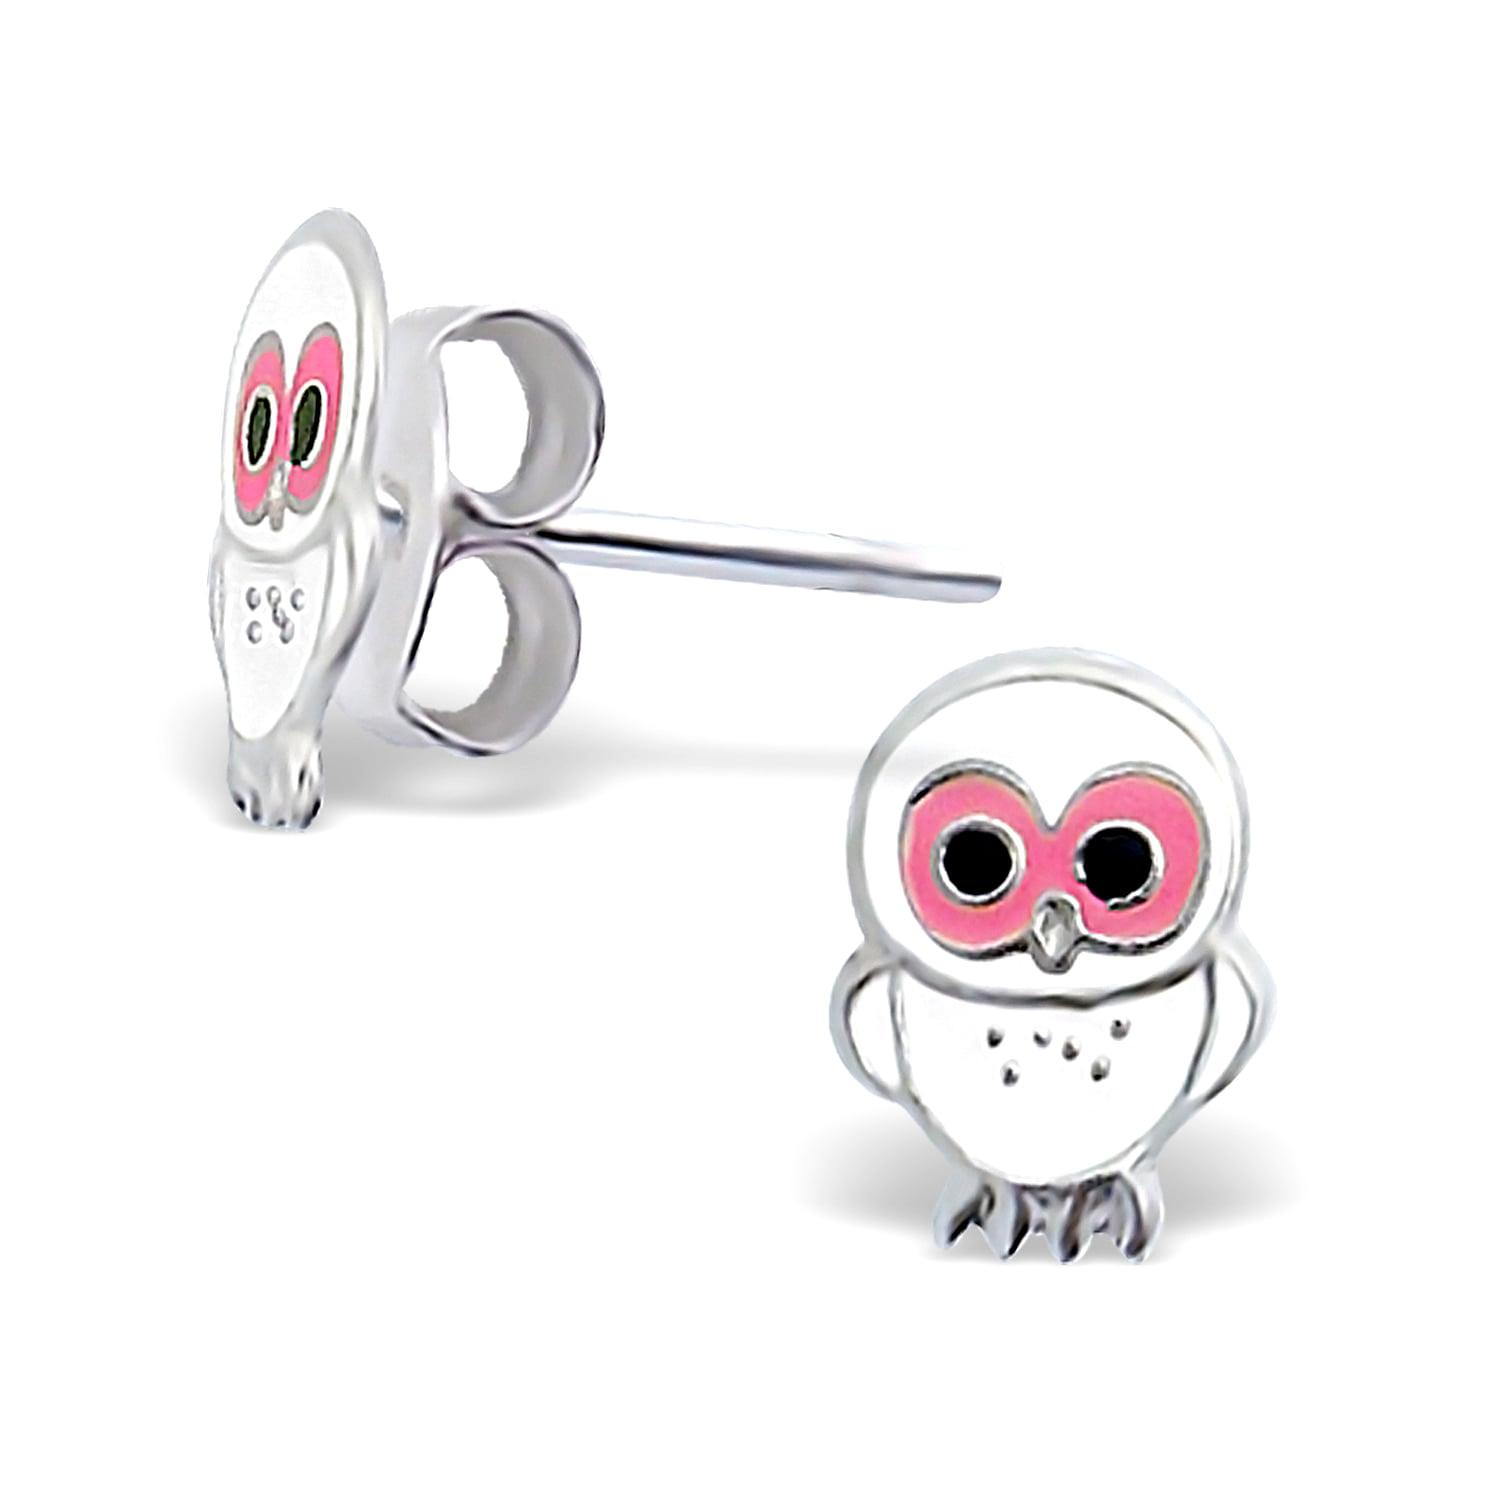 Pink Owl Earrings Sterling Silver Gift